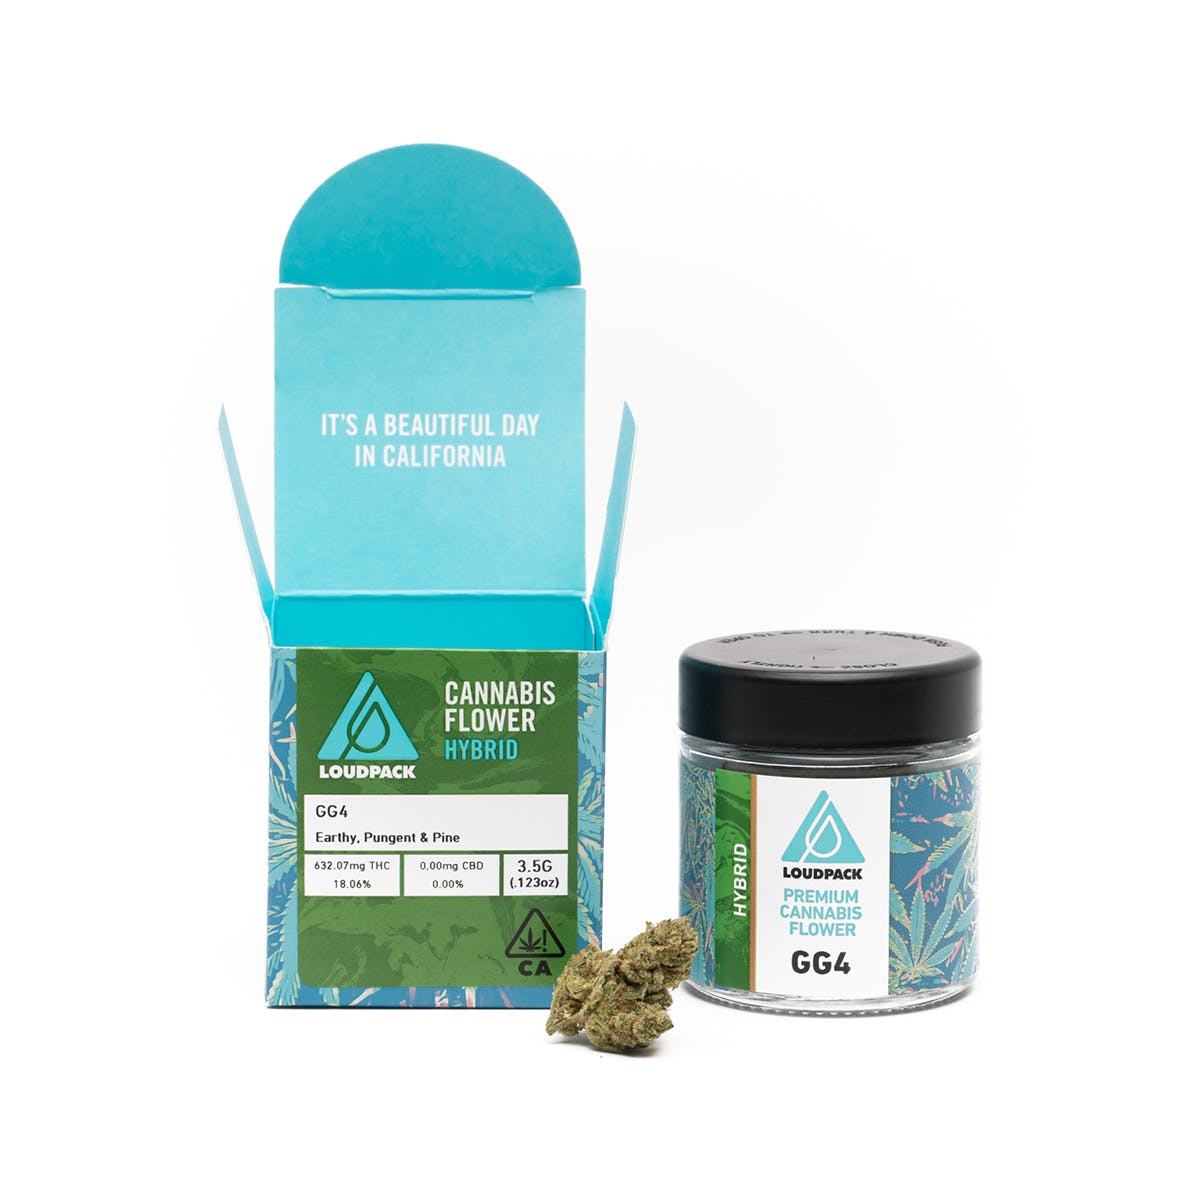 marijuana-dispensaries-25cap-van-nuys-solutions-in-van-nuys-loudpack-flower-gg4